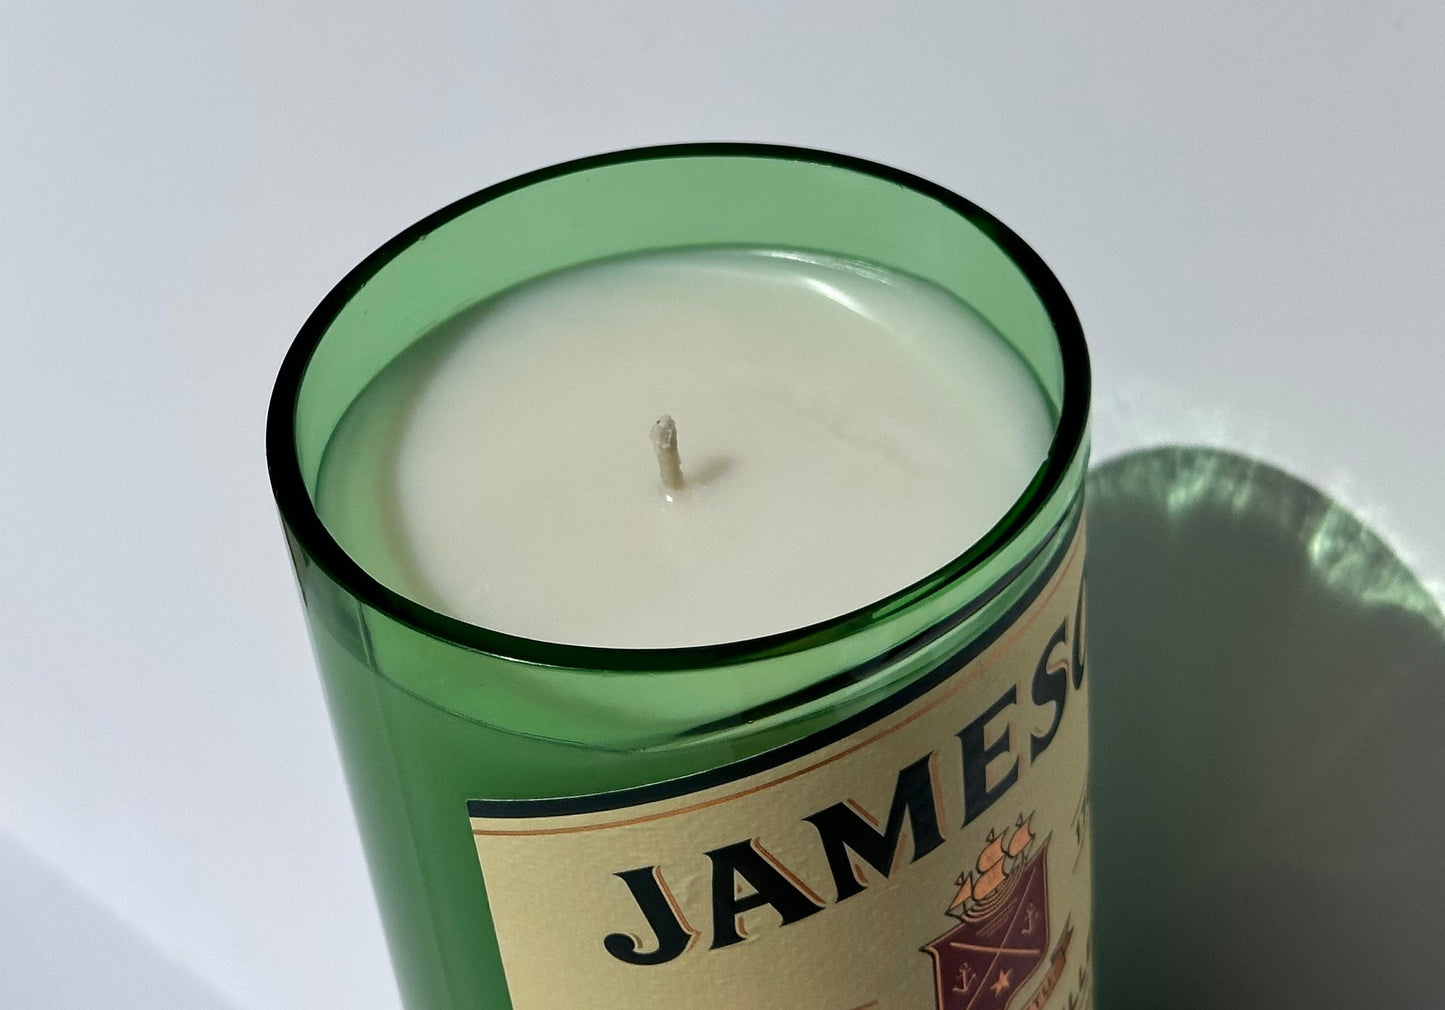 Jameson Whiskey 750ml Candle